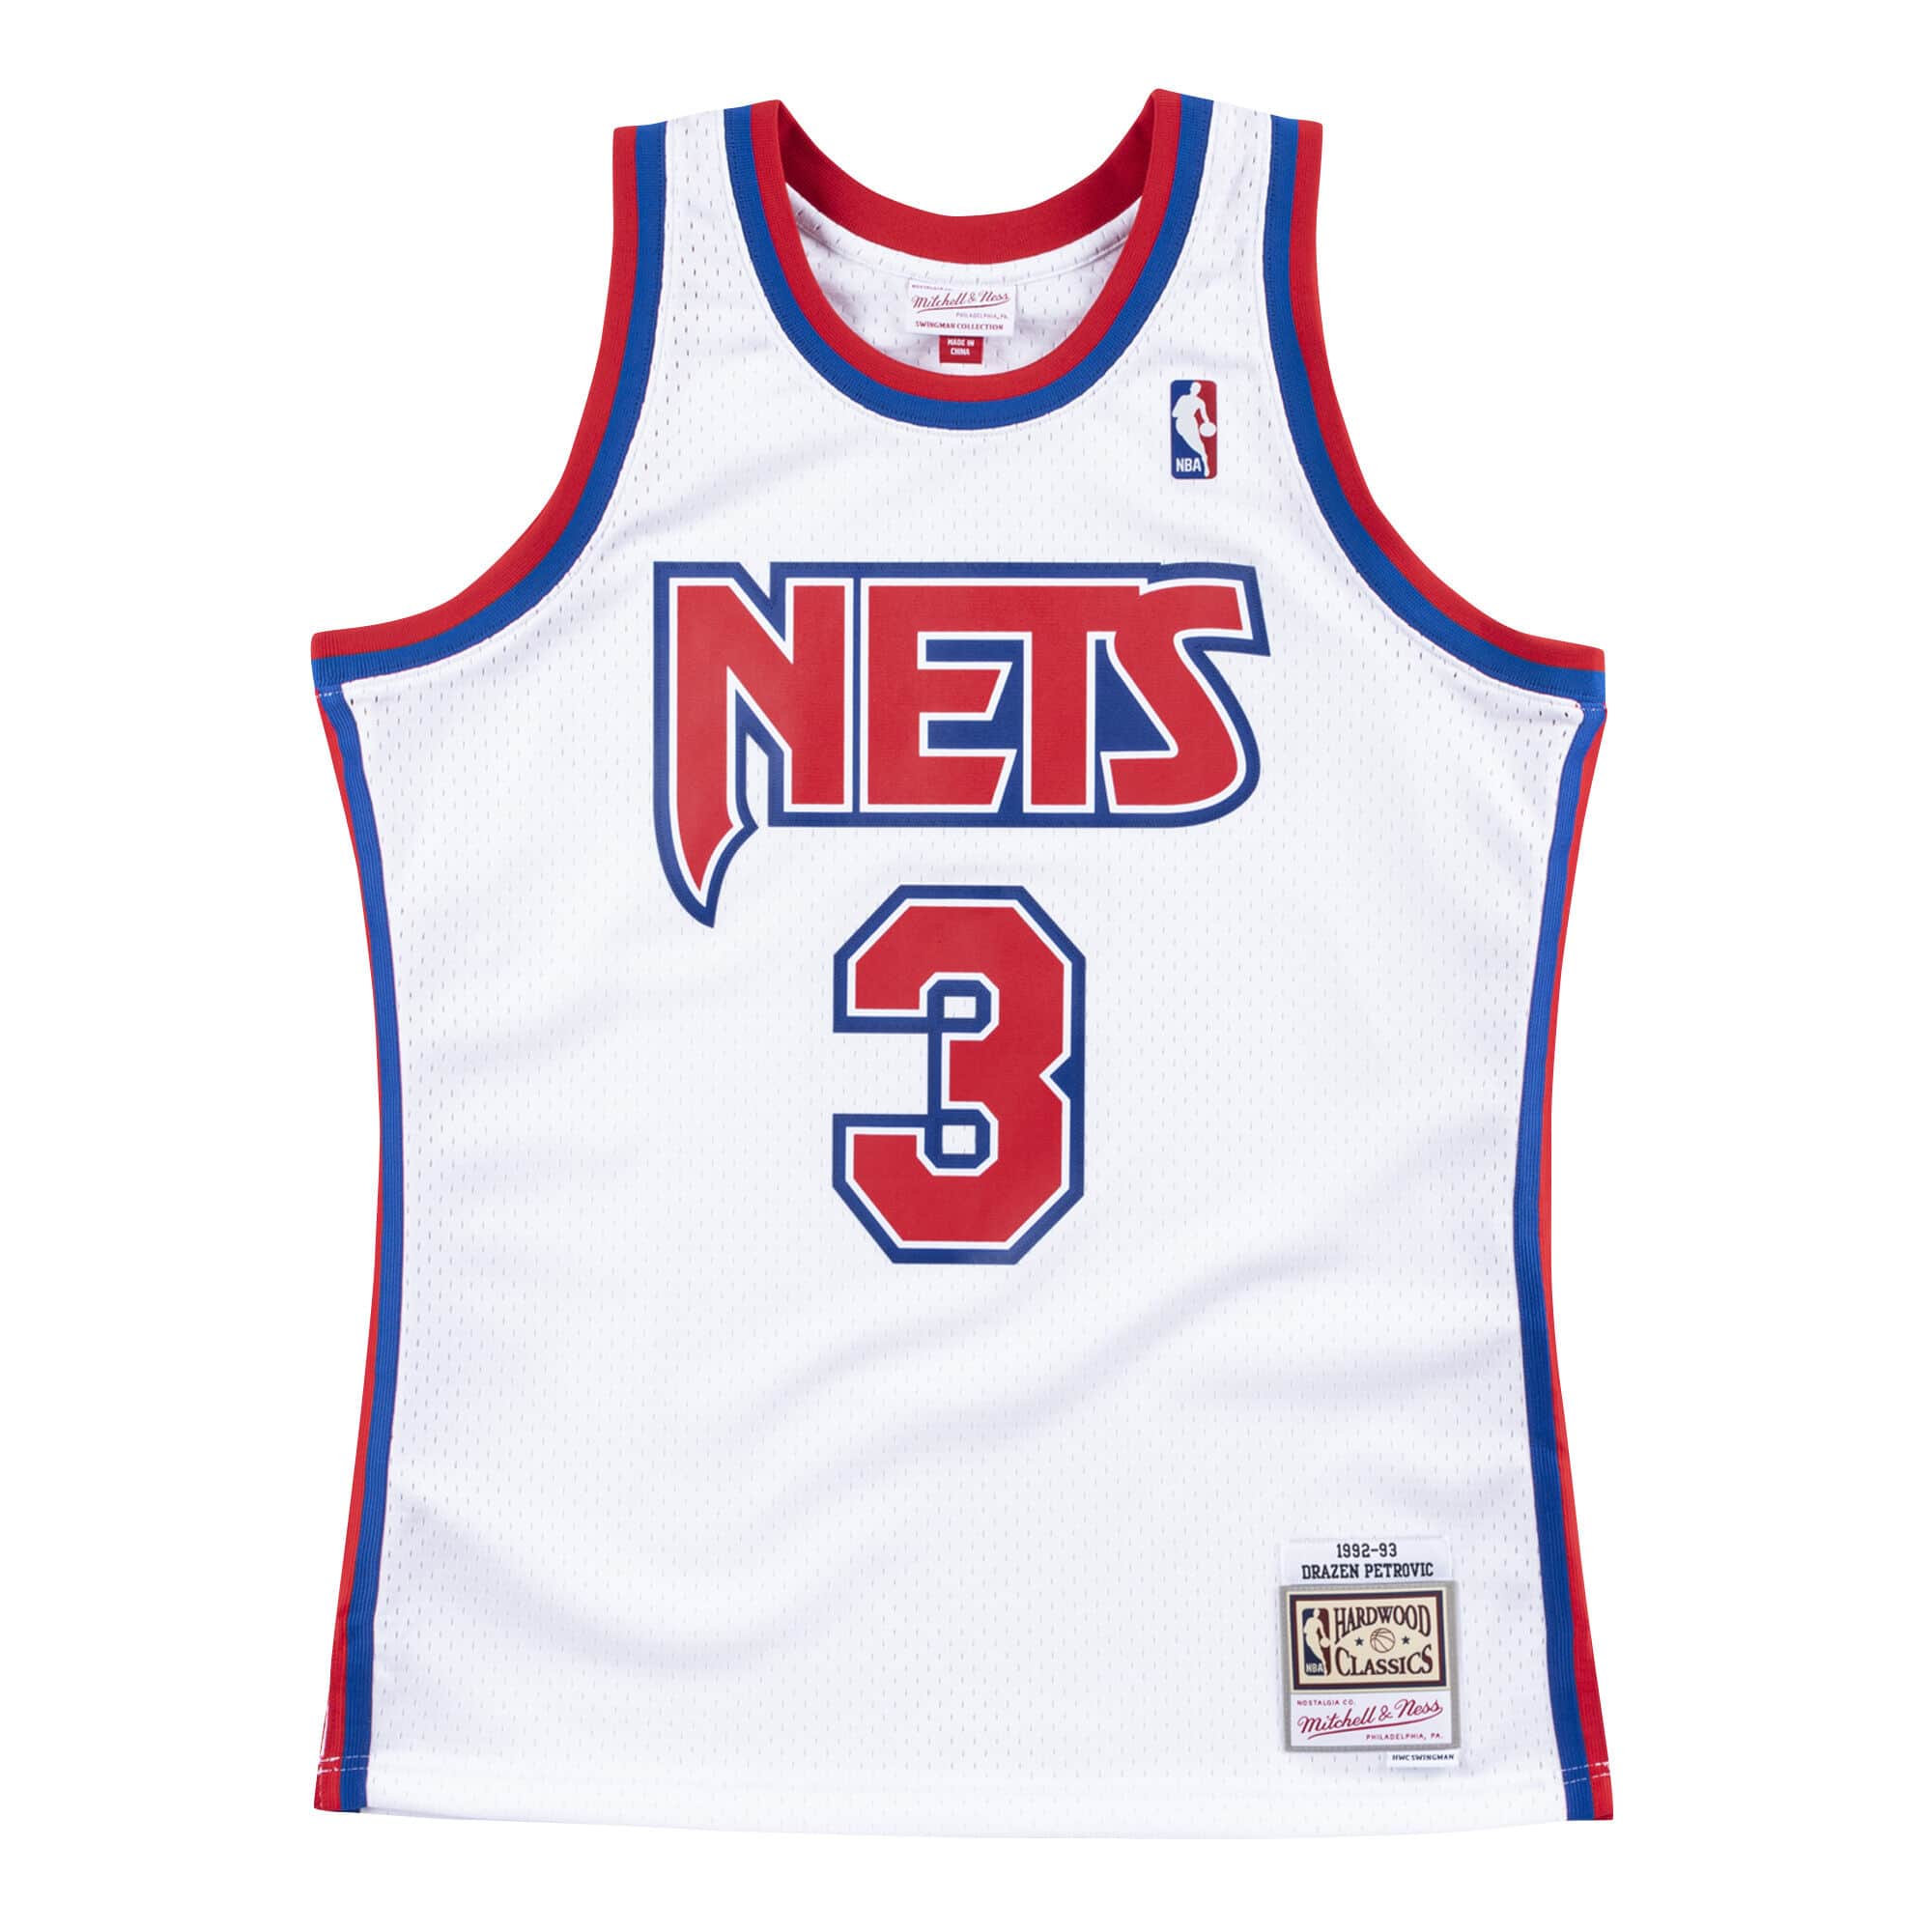 MITCHELL & NESS NBA HARDWOOD CLASSIC SWINGMAN New YORK KNICKS LATRELL SPREWELL ROAD 1998-99 JERSEY ROYAL S / New